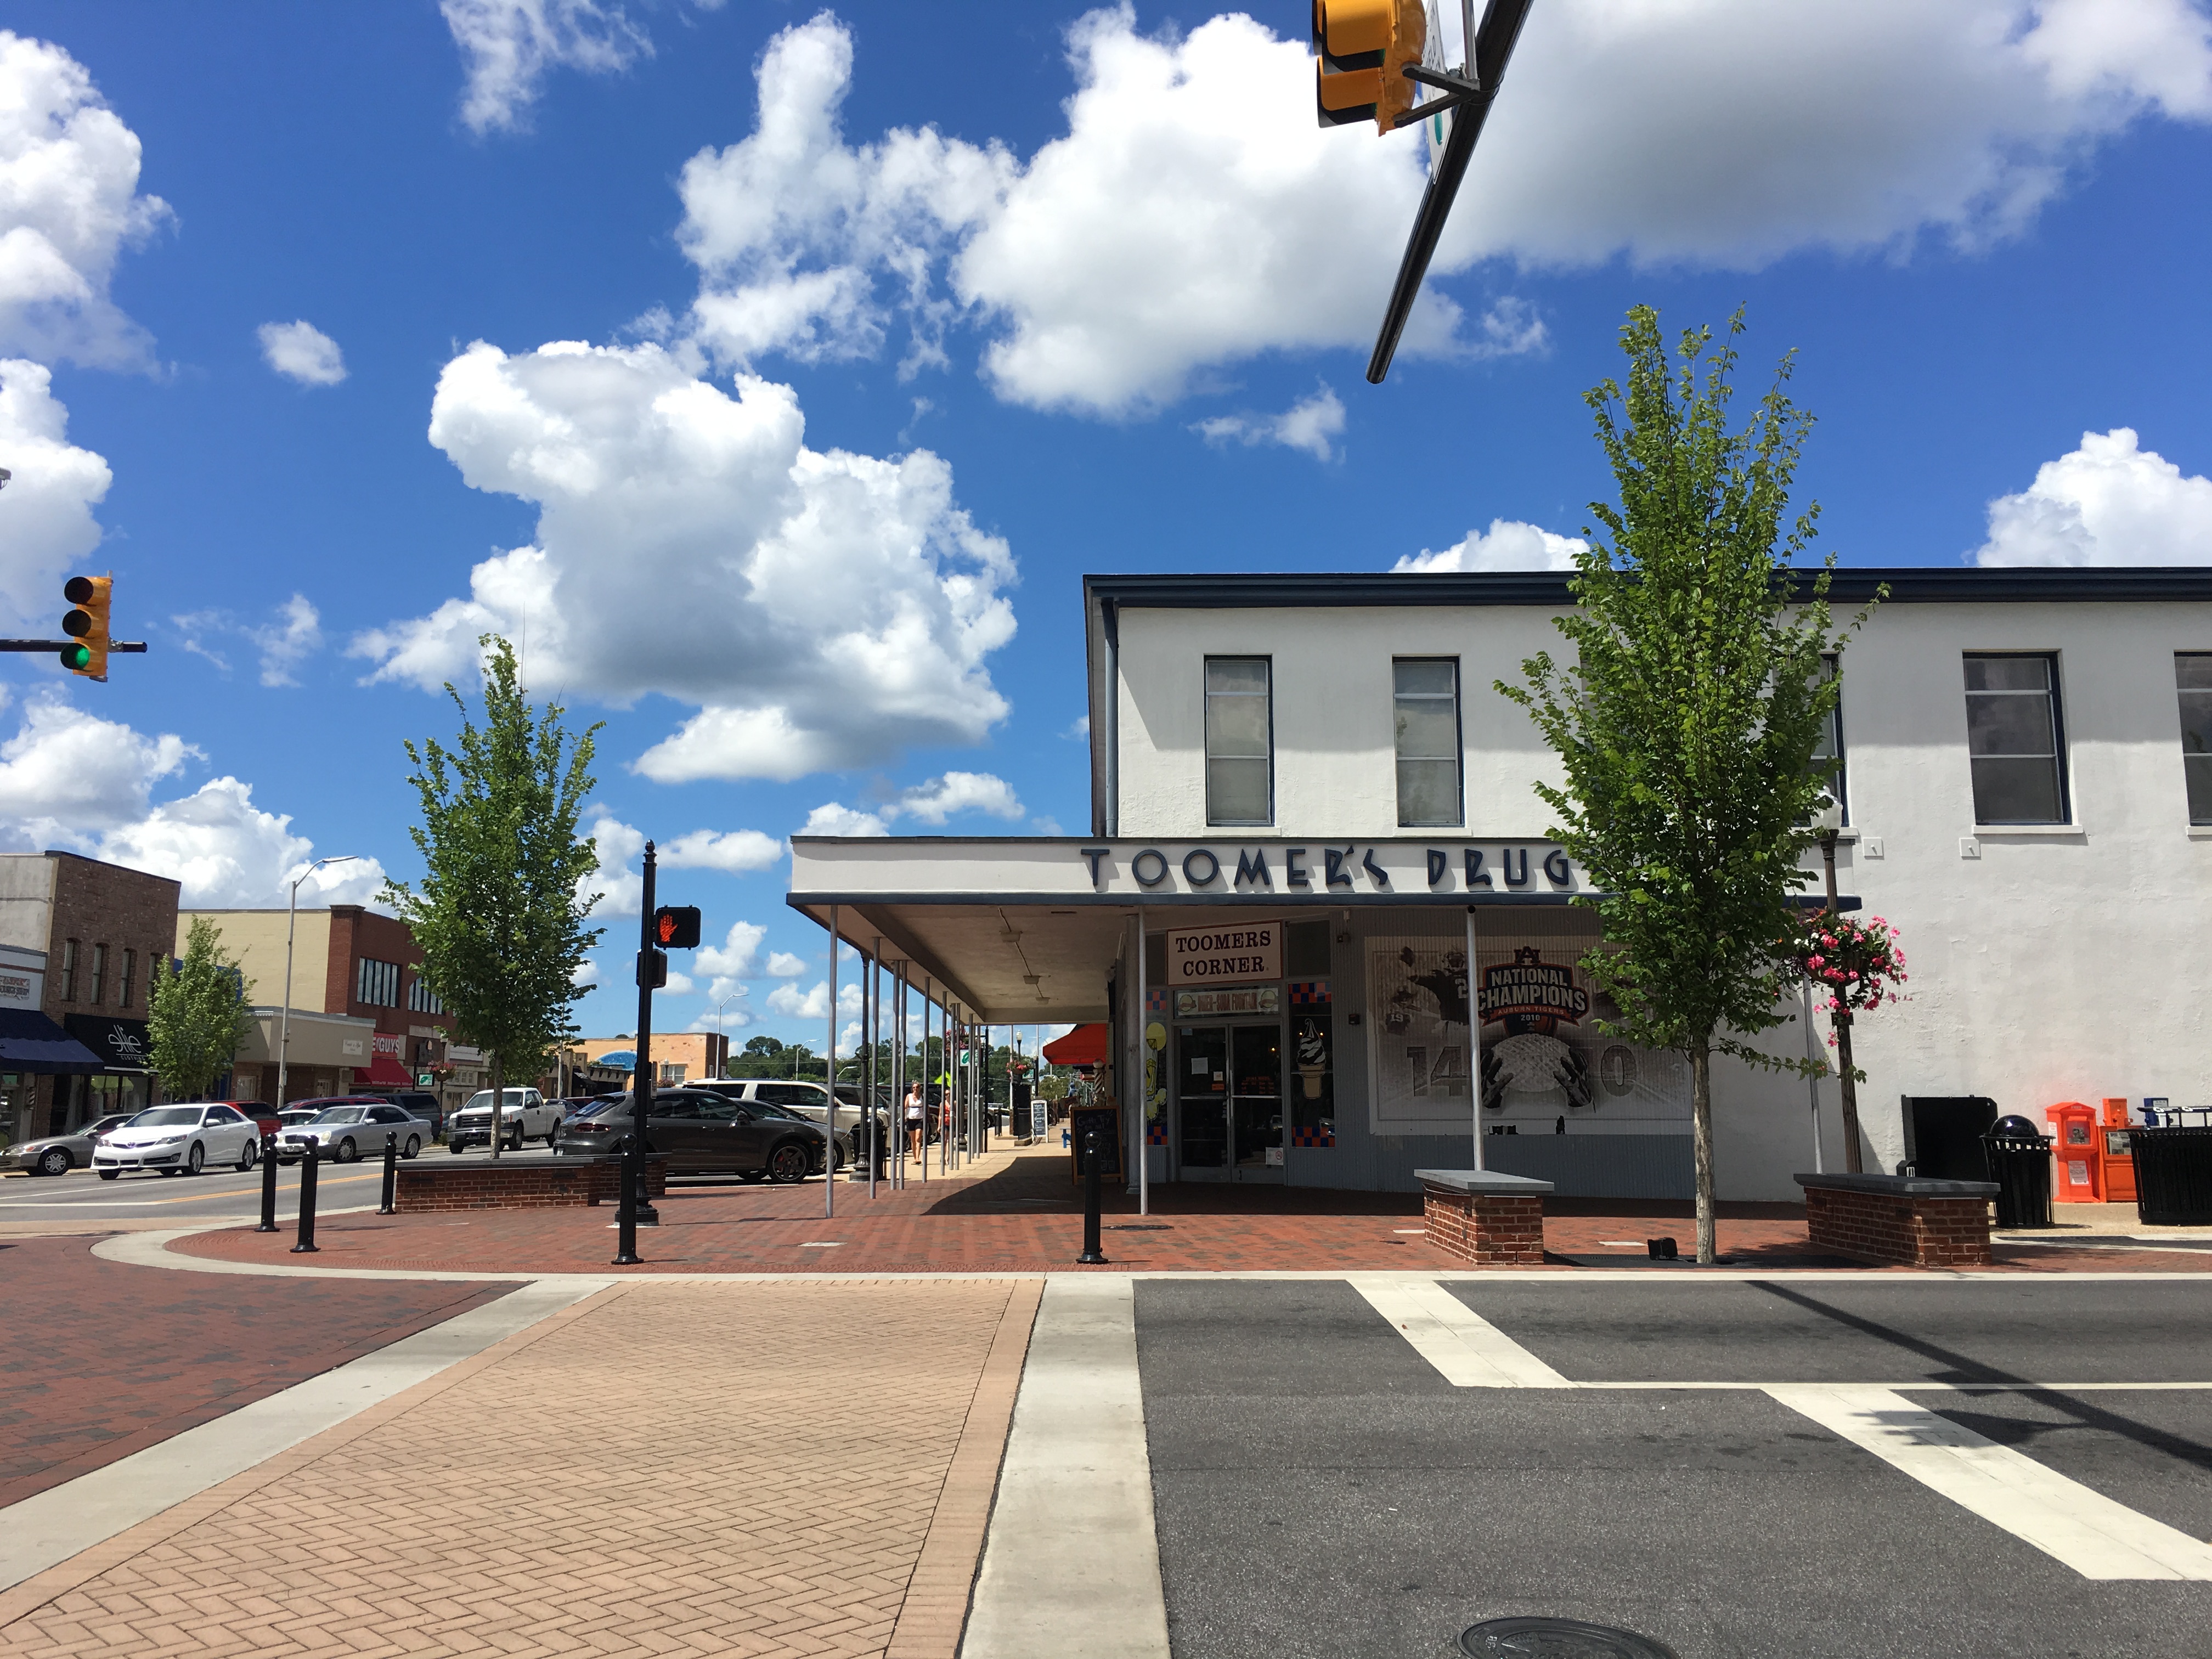 Auburn and Opelika Tourism Bureau - Toomers Drugstore